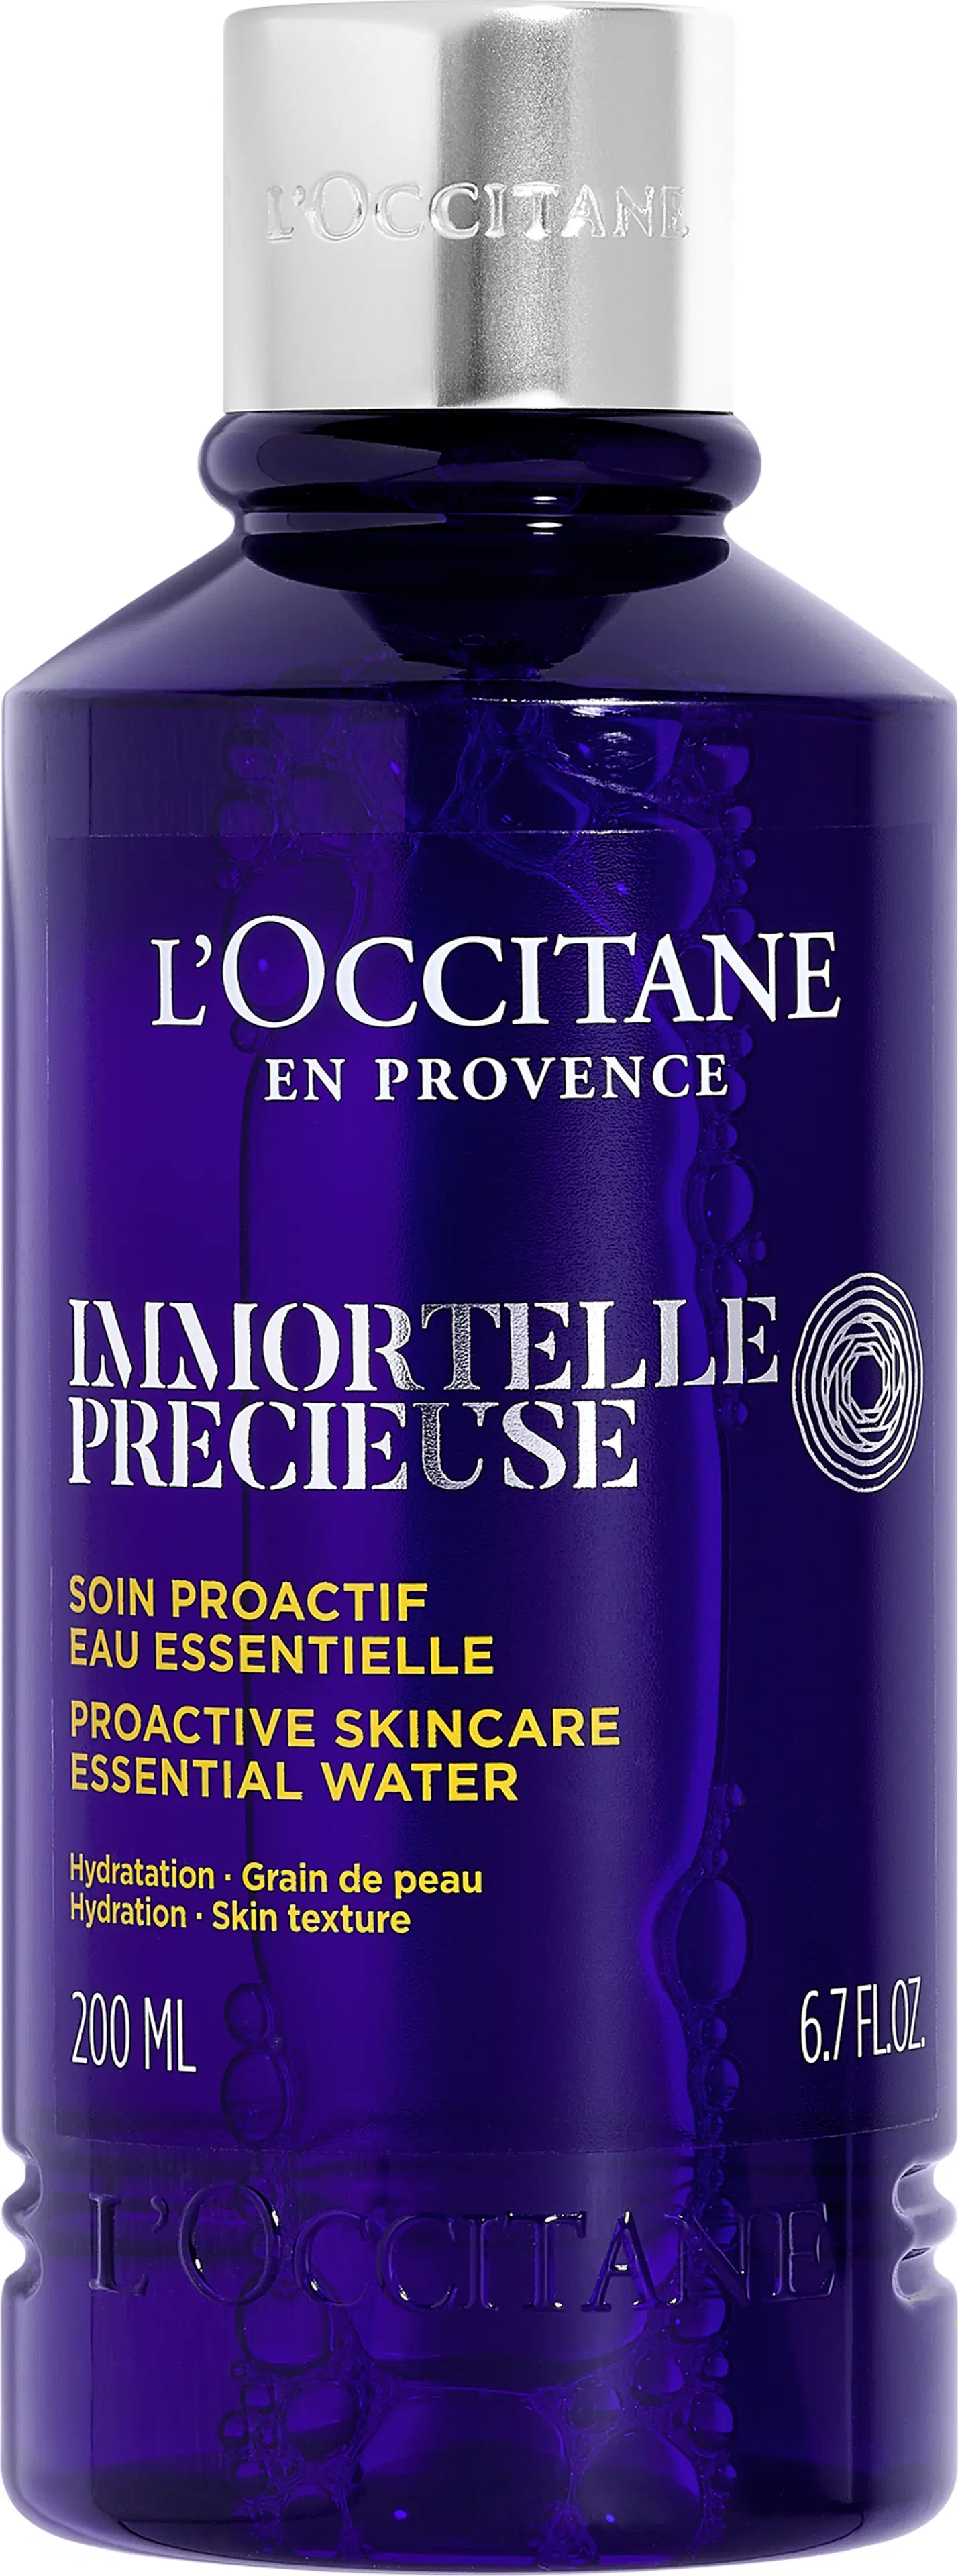 L'Occitane Precious Essential Water kasvovesi 200 ml